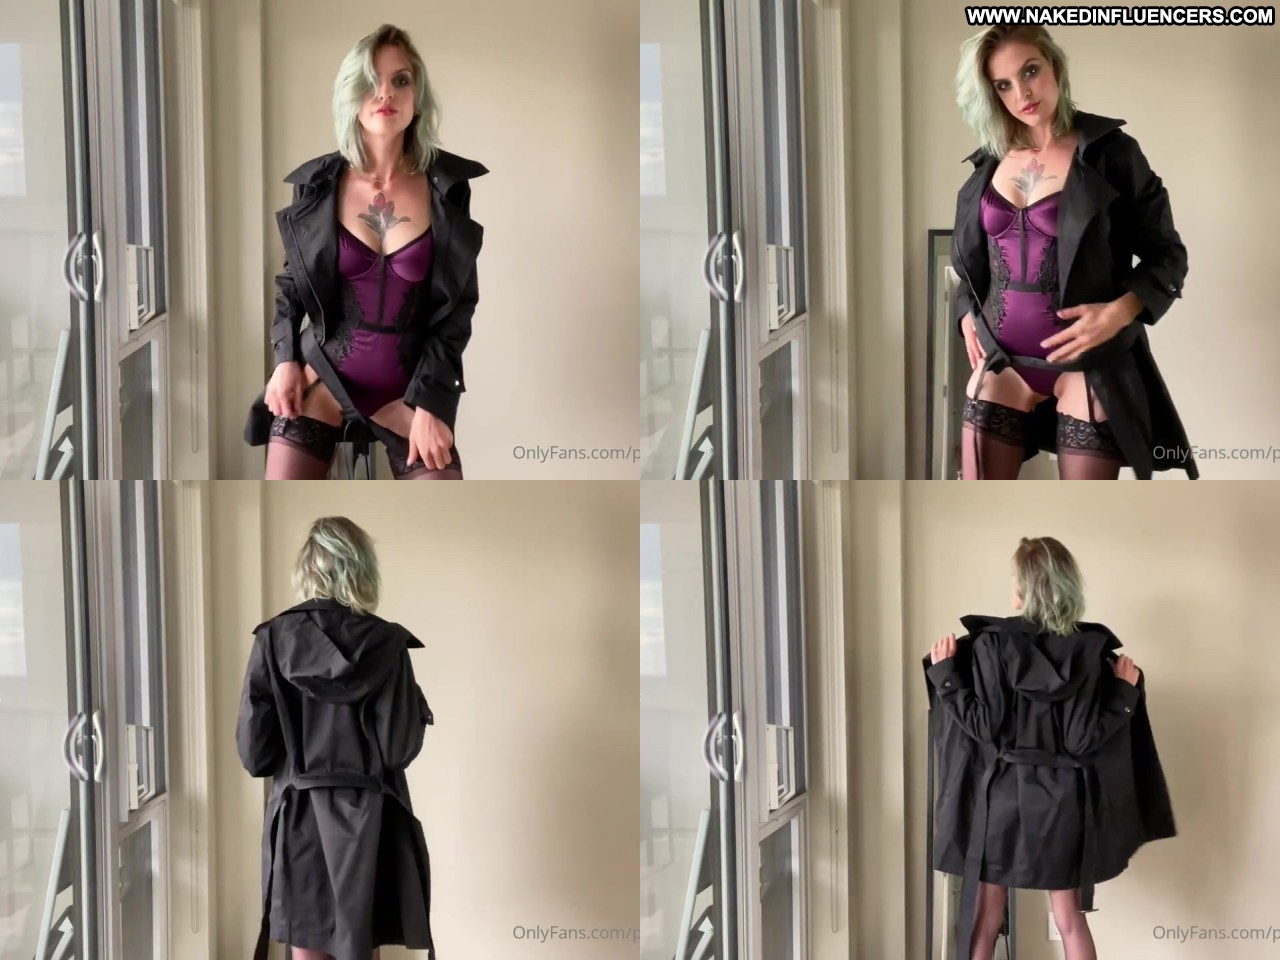 2151-phoebe-yvette-straight-influencer-porn-xxx-video-hot-sex-pussy-lingerie